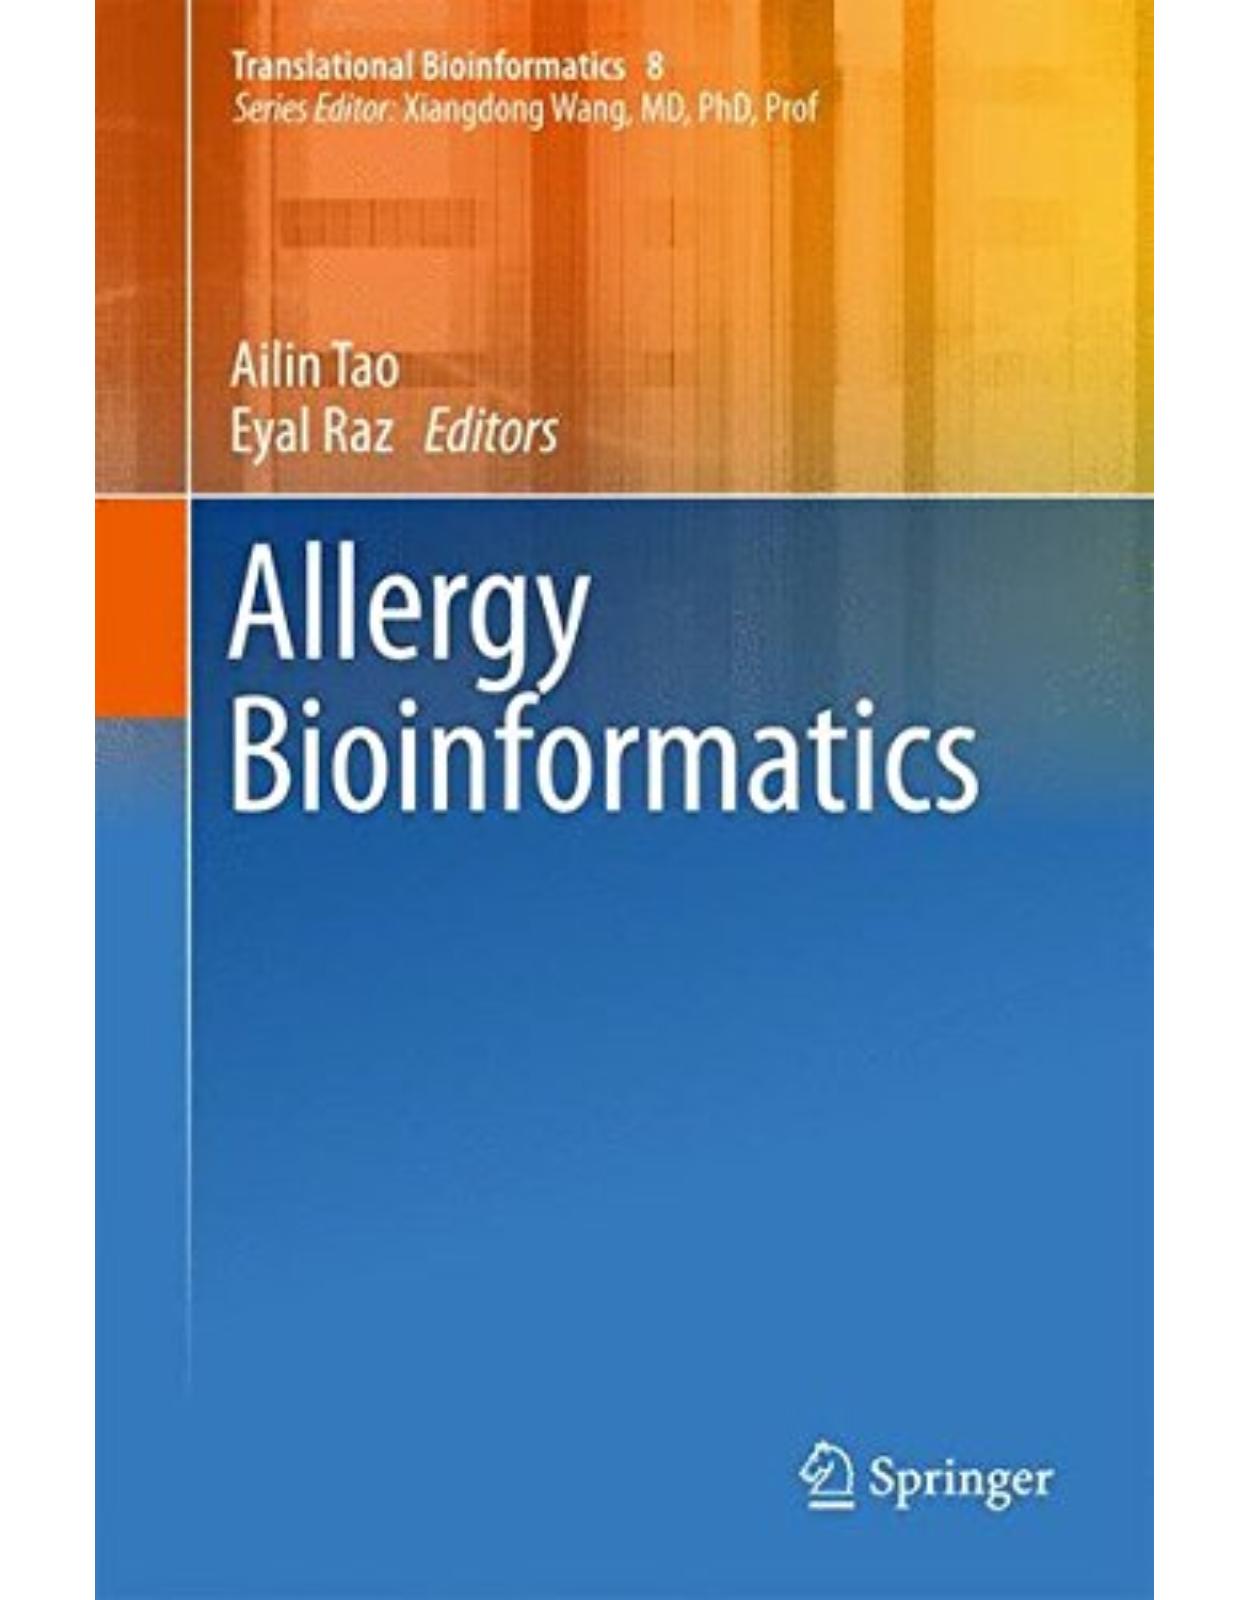 Allergy Bioinformatics (Translational Bioinformatics)